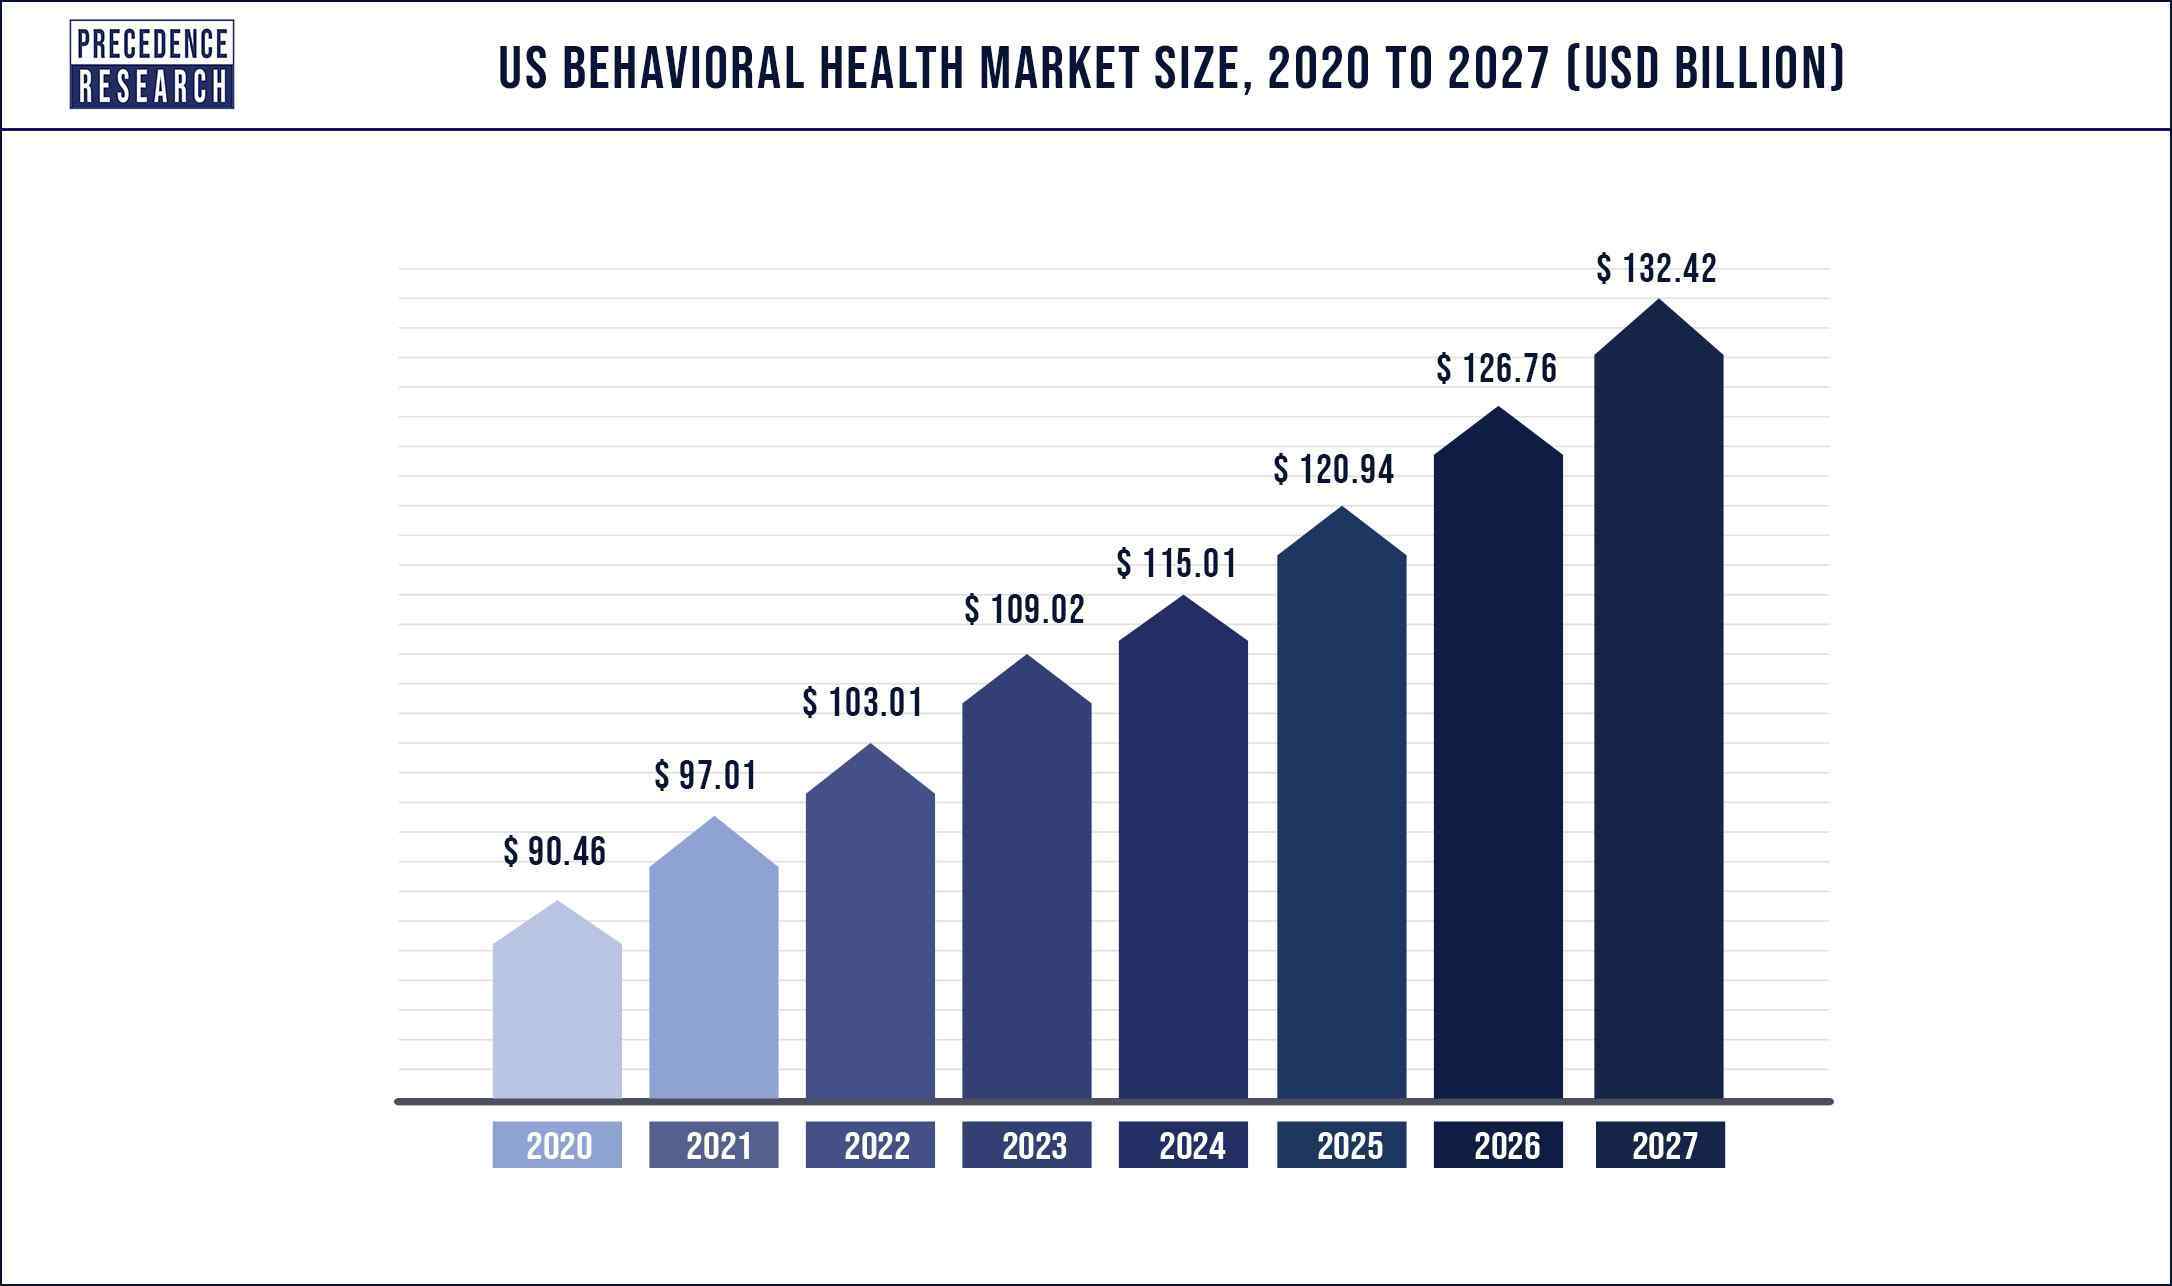 U.S. Behavioral Health Market Size 2020 to 2027